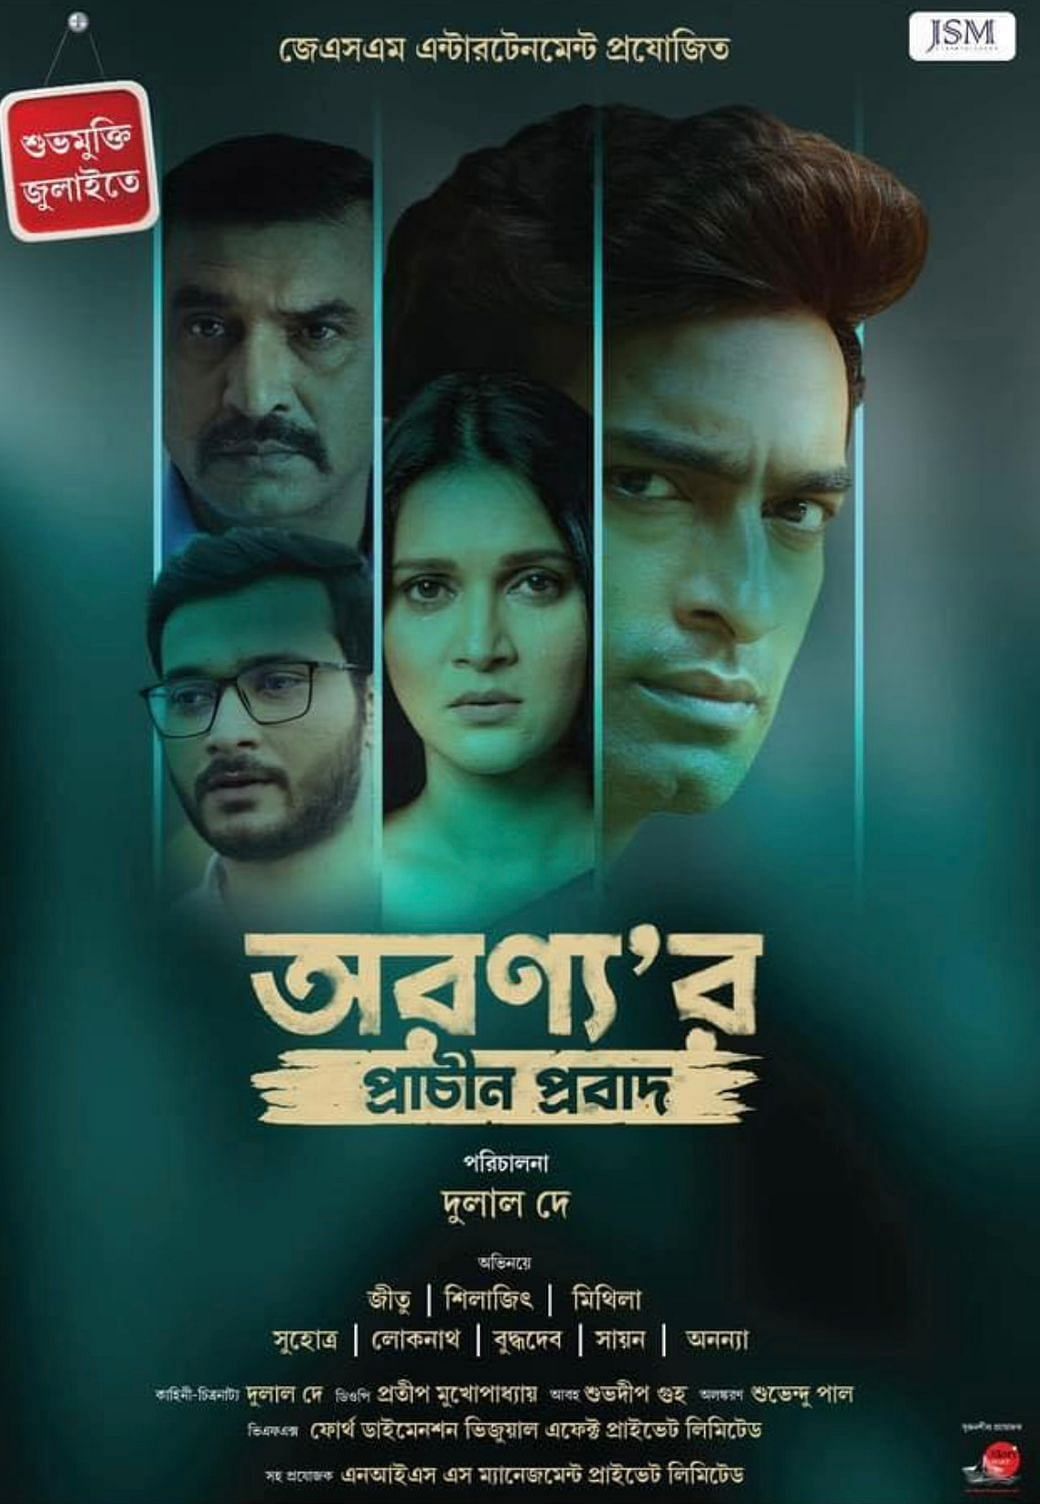 Poster of Dulal Dey's film 'Aranyer Prachin Probad'